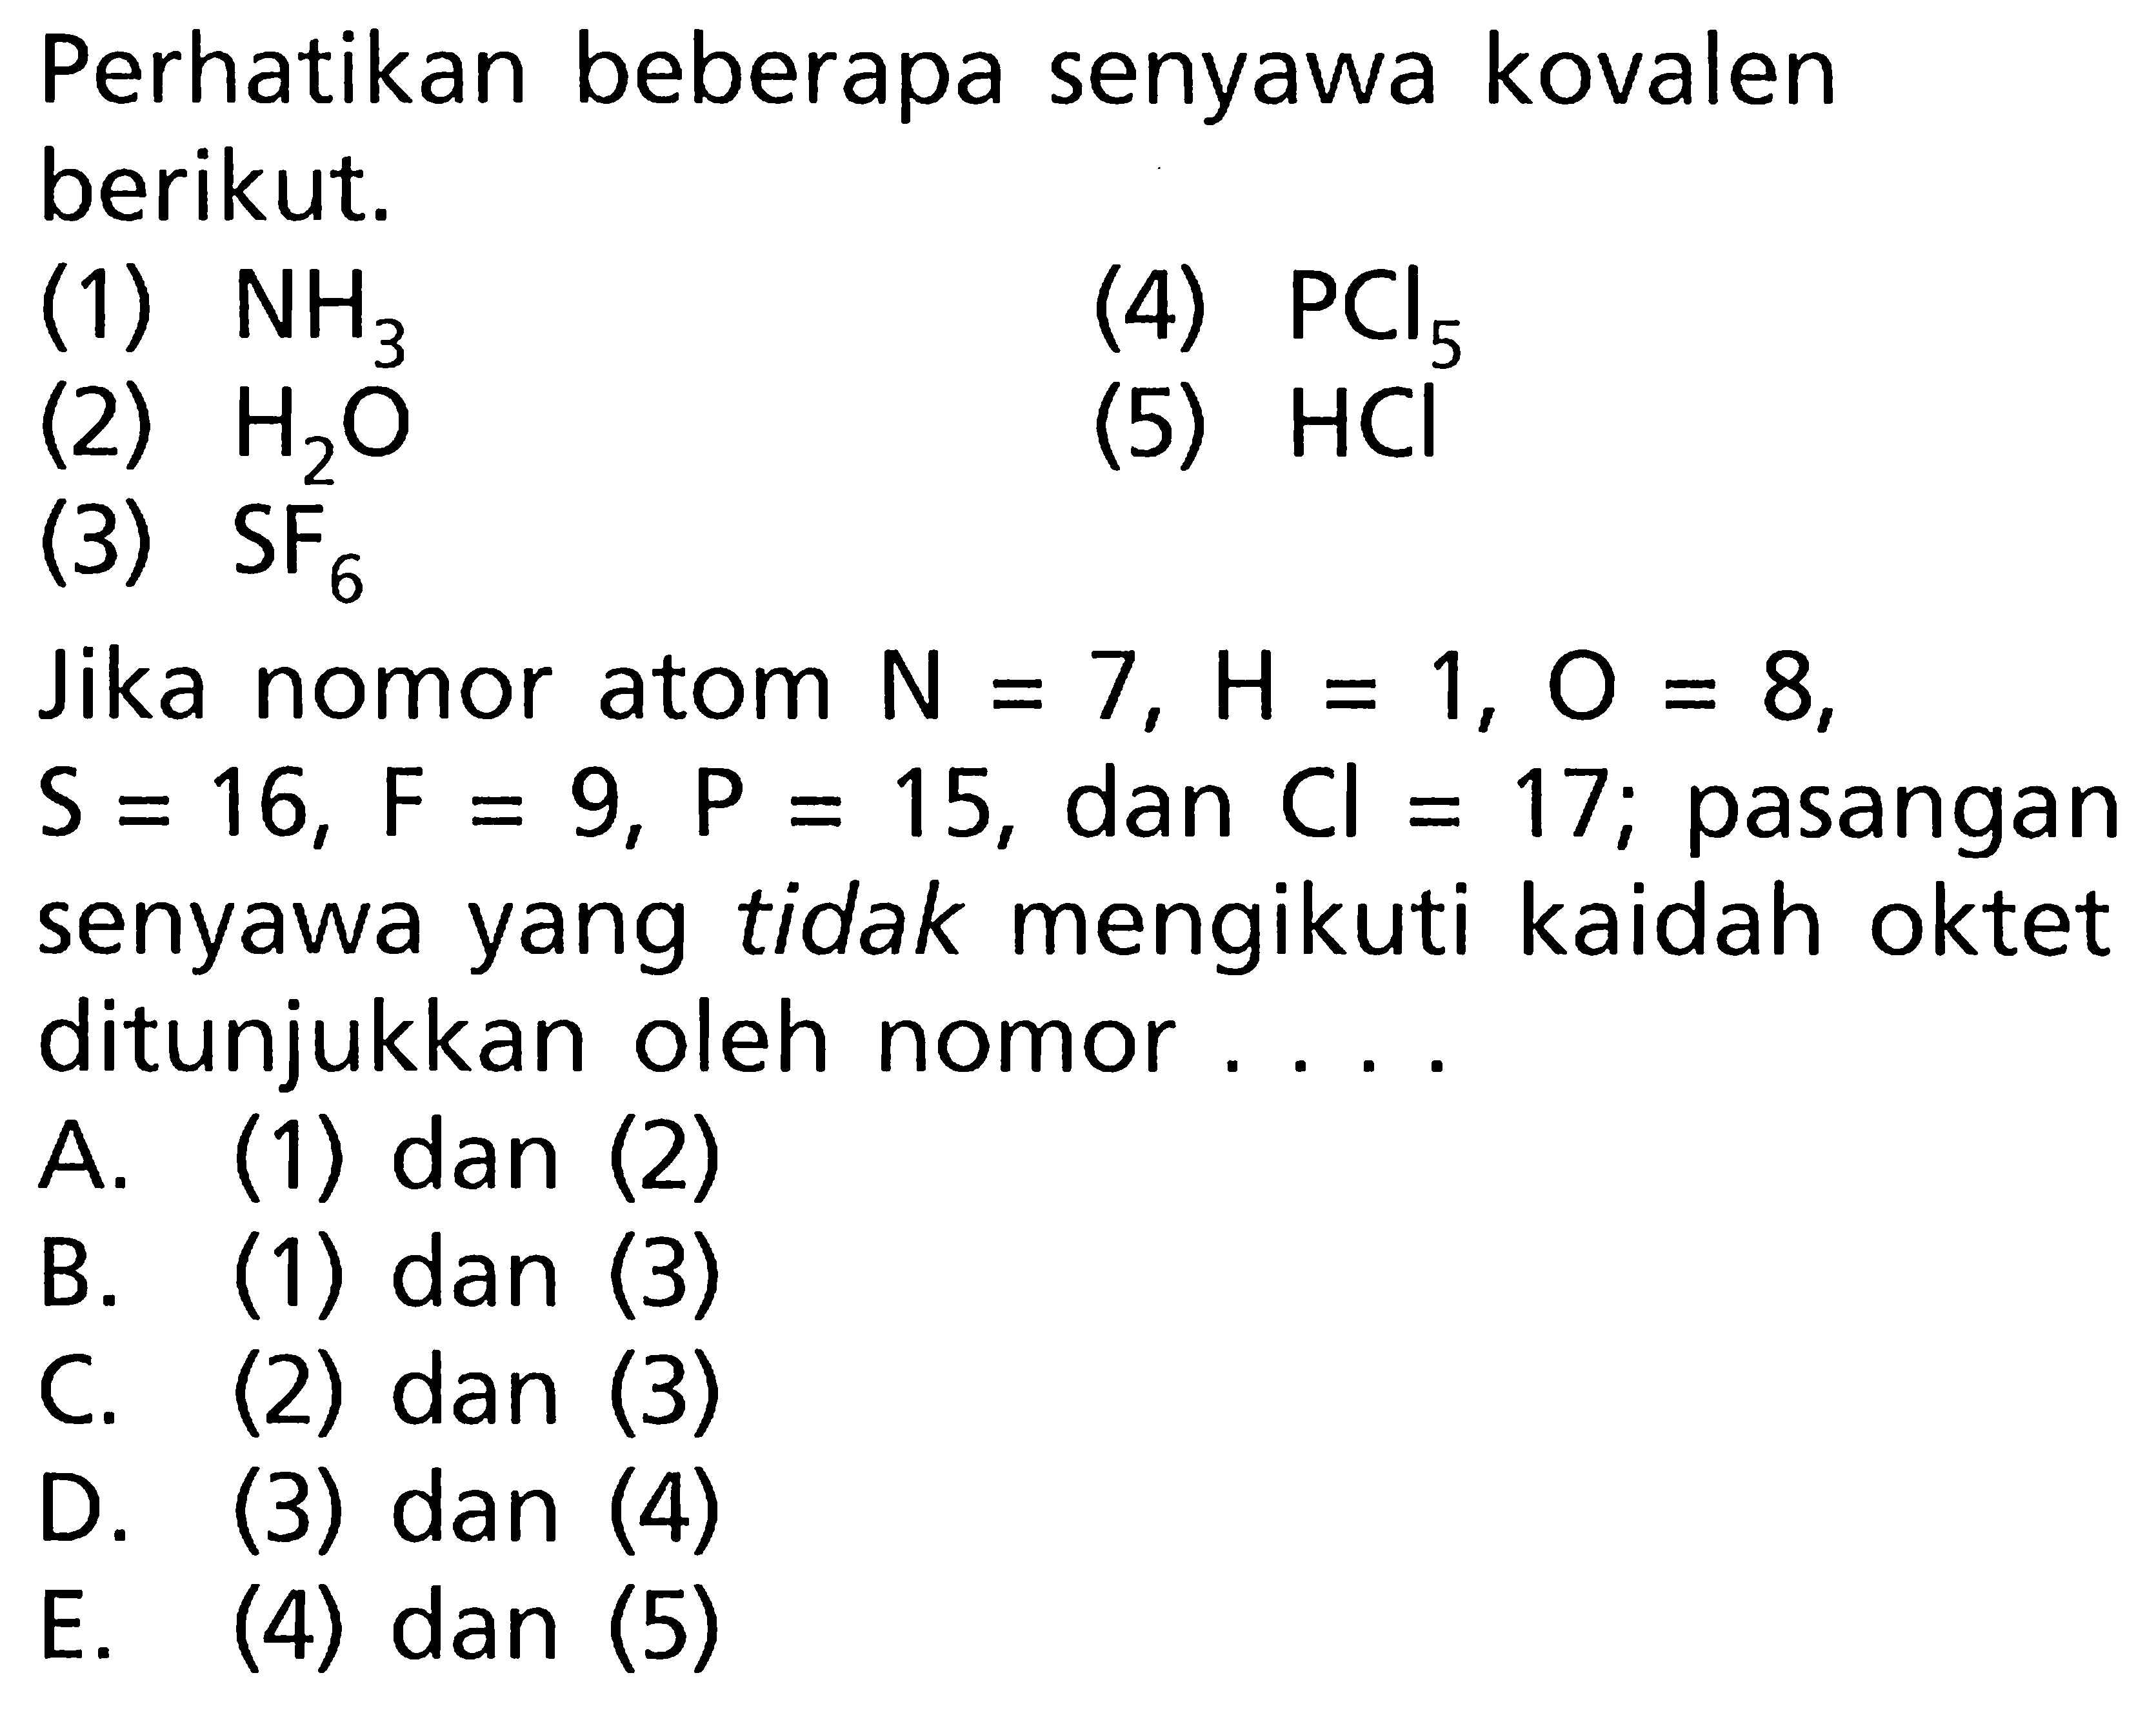 Perhatikan beberapa senyawa kovalen berikut. (1) NH3 (2) H2O (3) SF6 (4) PCl5 (5) HCl Jika nomor atom N = 7, H = 1, O = 8, S = 16, F = 9, P = 15, dan Cl = 17; pasangan senyawa yang tidak mengikuti kaidah oktet ditunjukkan oleh nomor ....